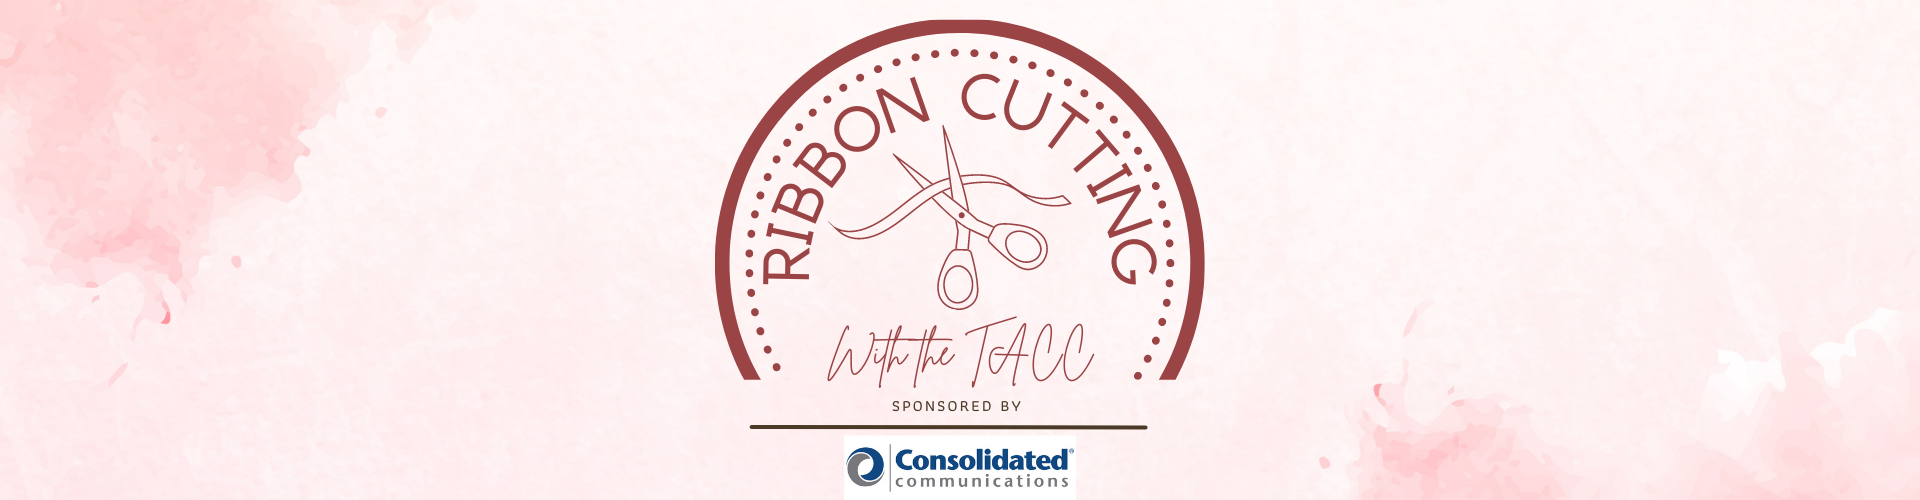 thumbnails Ribbon Cutting - The Cherokee County Democrats